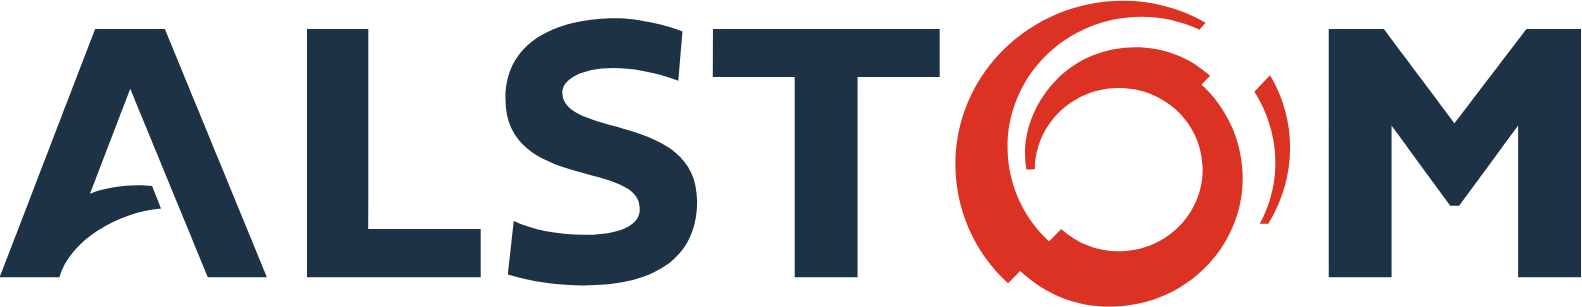 Alstom logo in transparent PNG and vectorized SVG formats